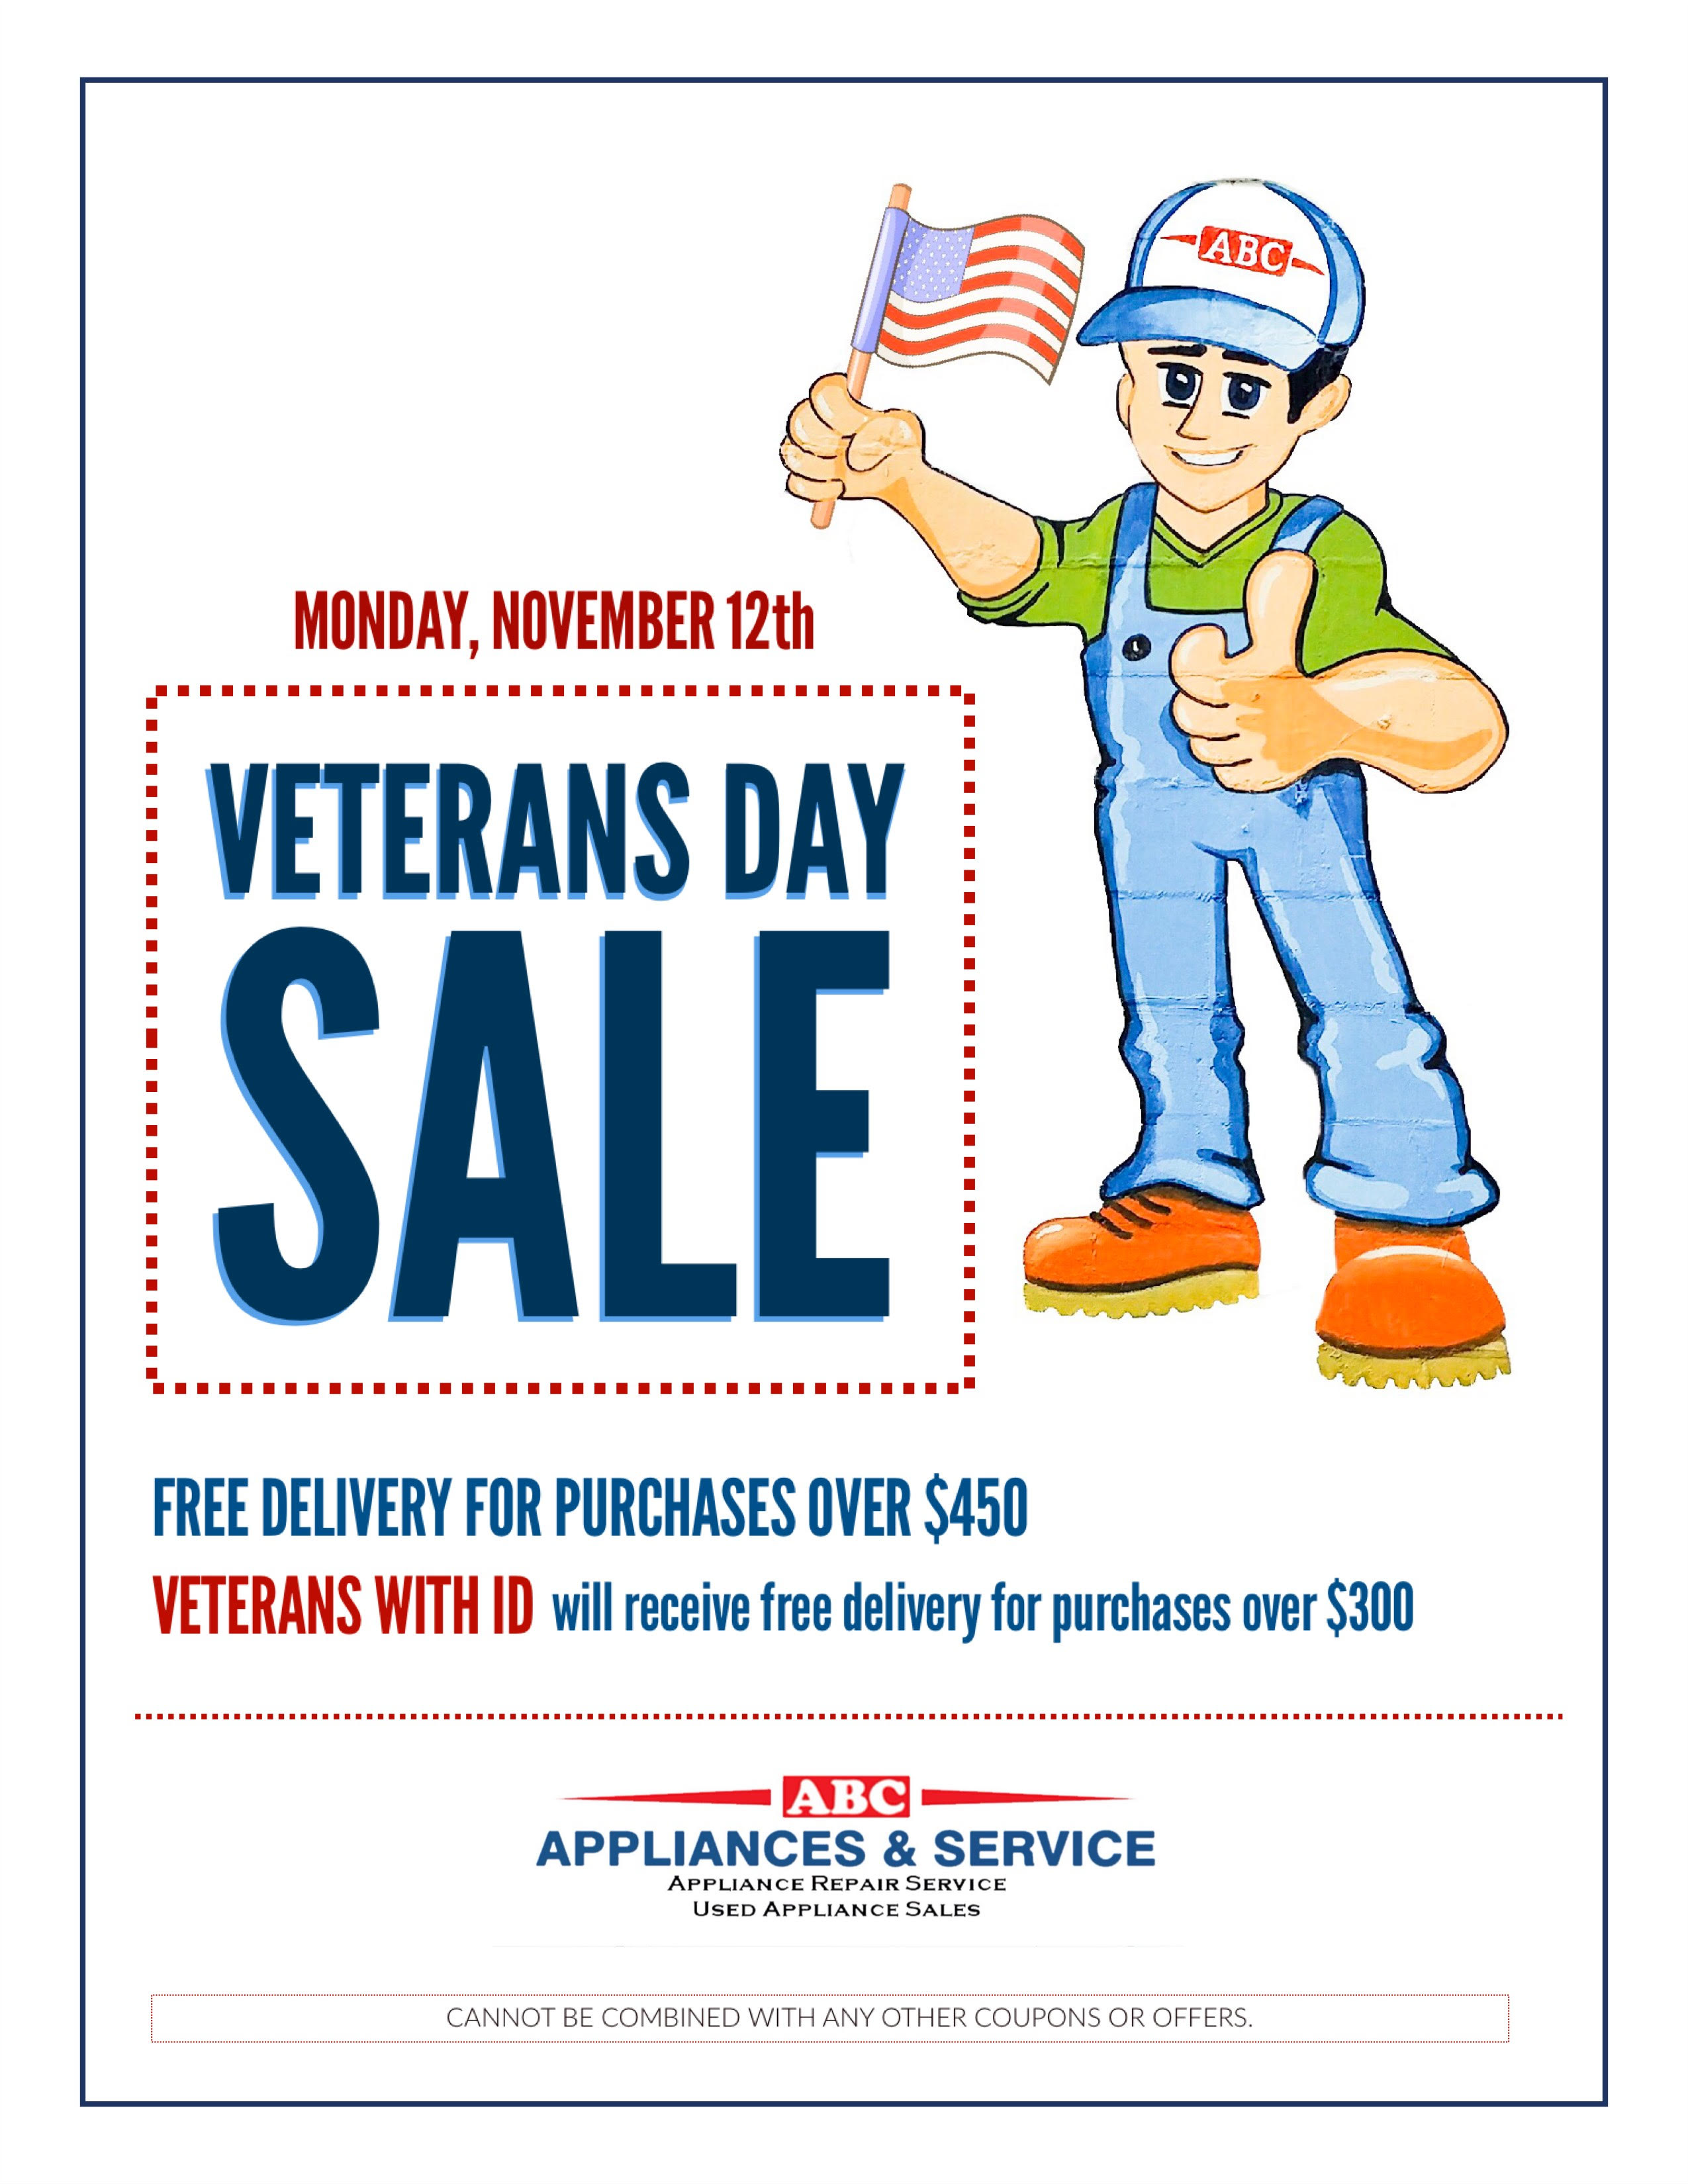 Veterans Day Sale Monday, November 12th!!!